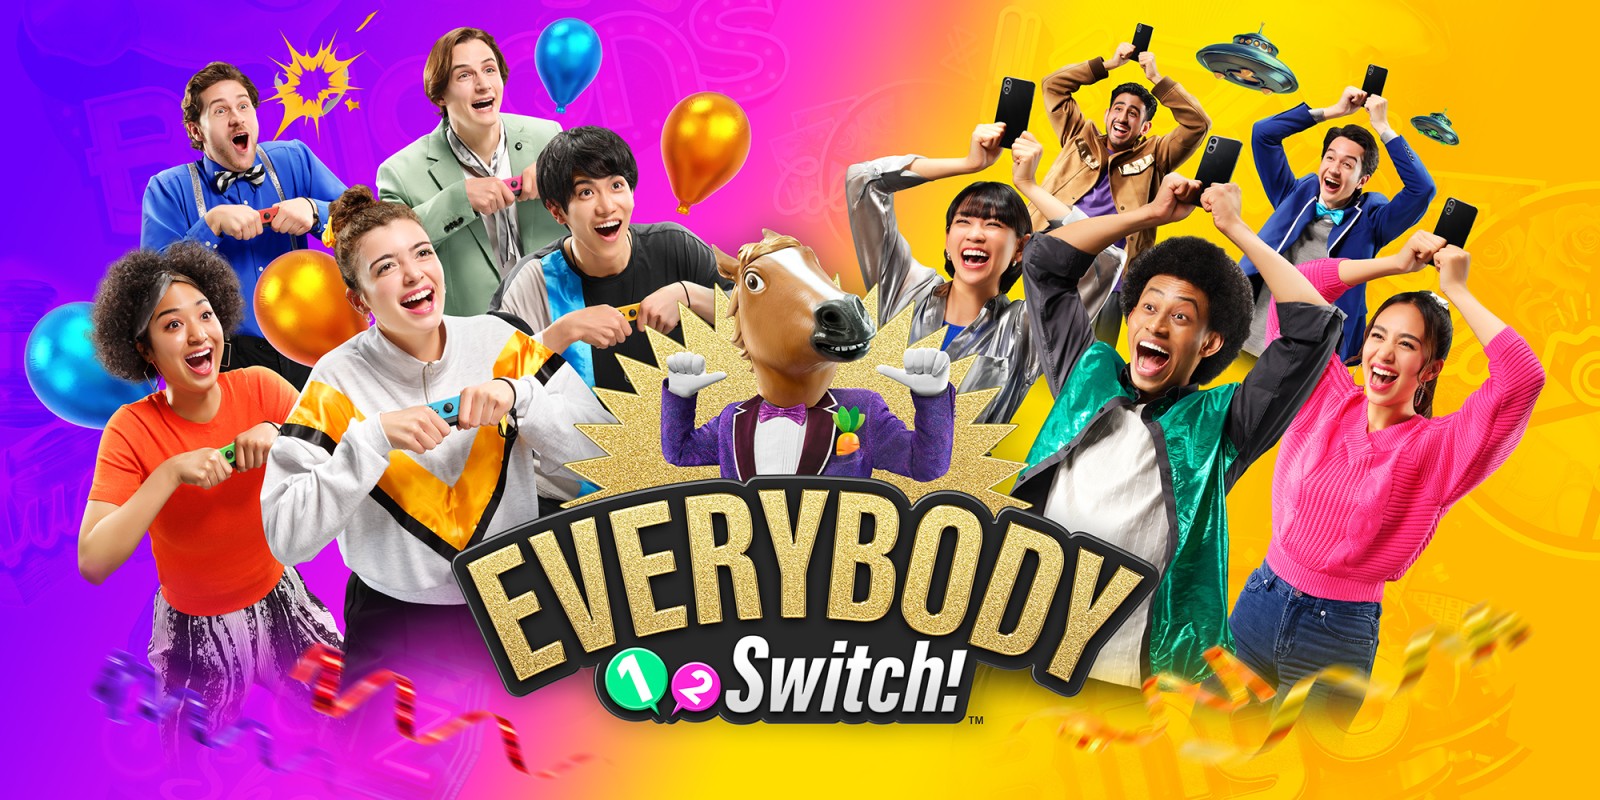 Everybody 1-2-Switch